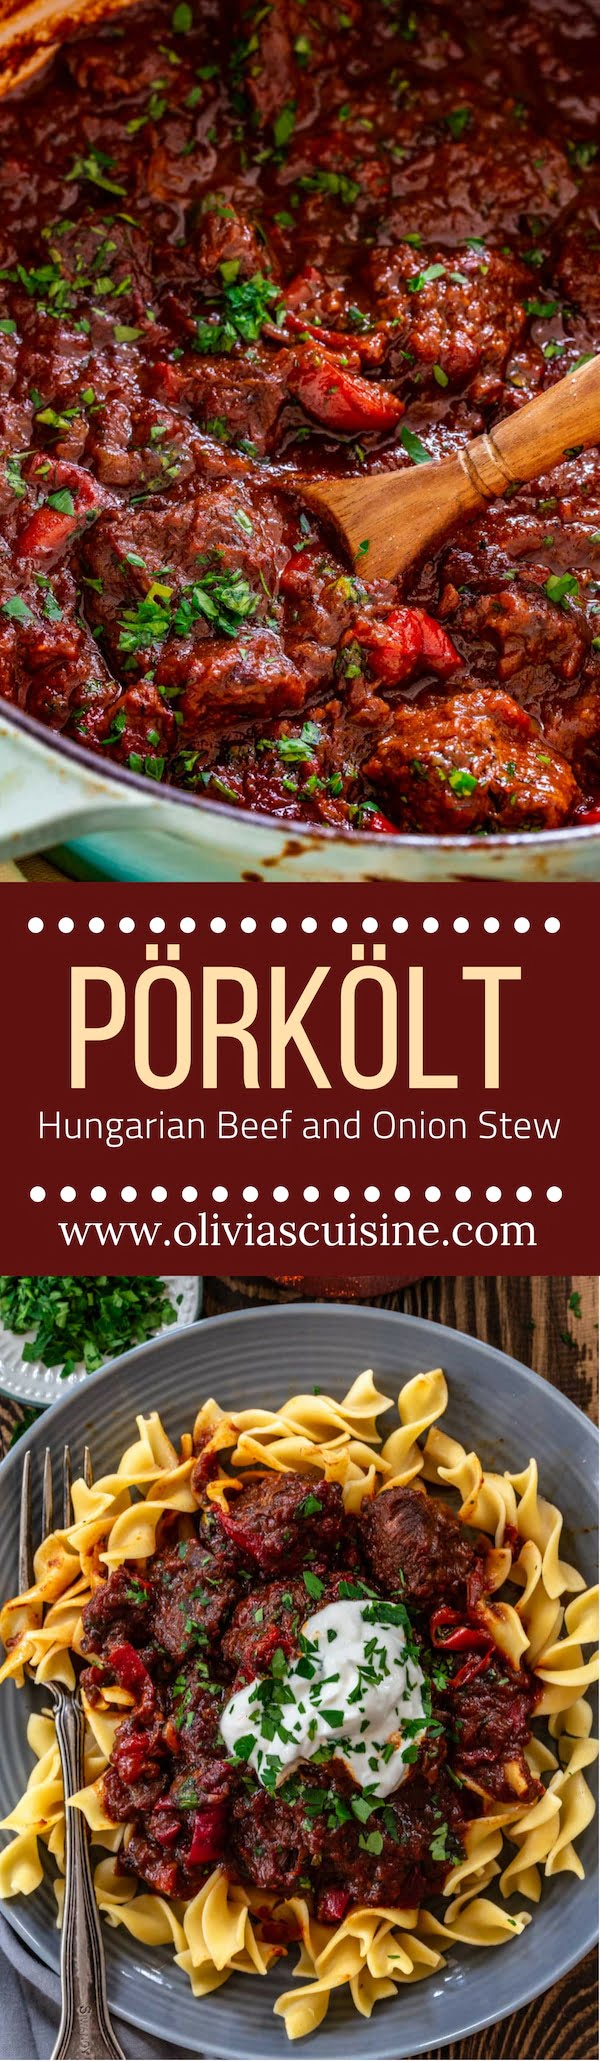 A collage of Porkolt beef stew photos